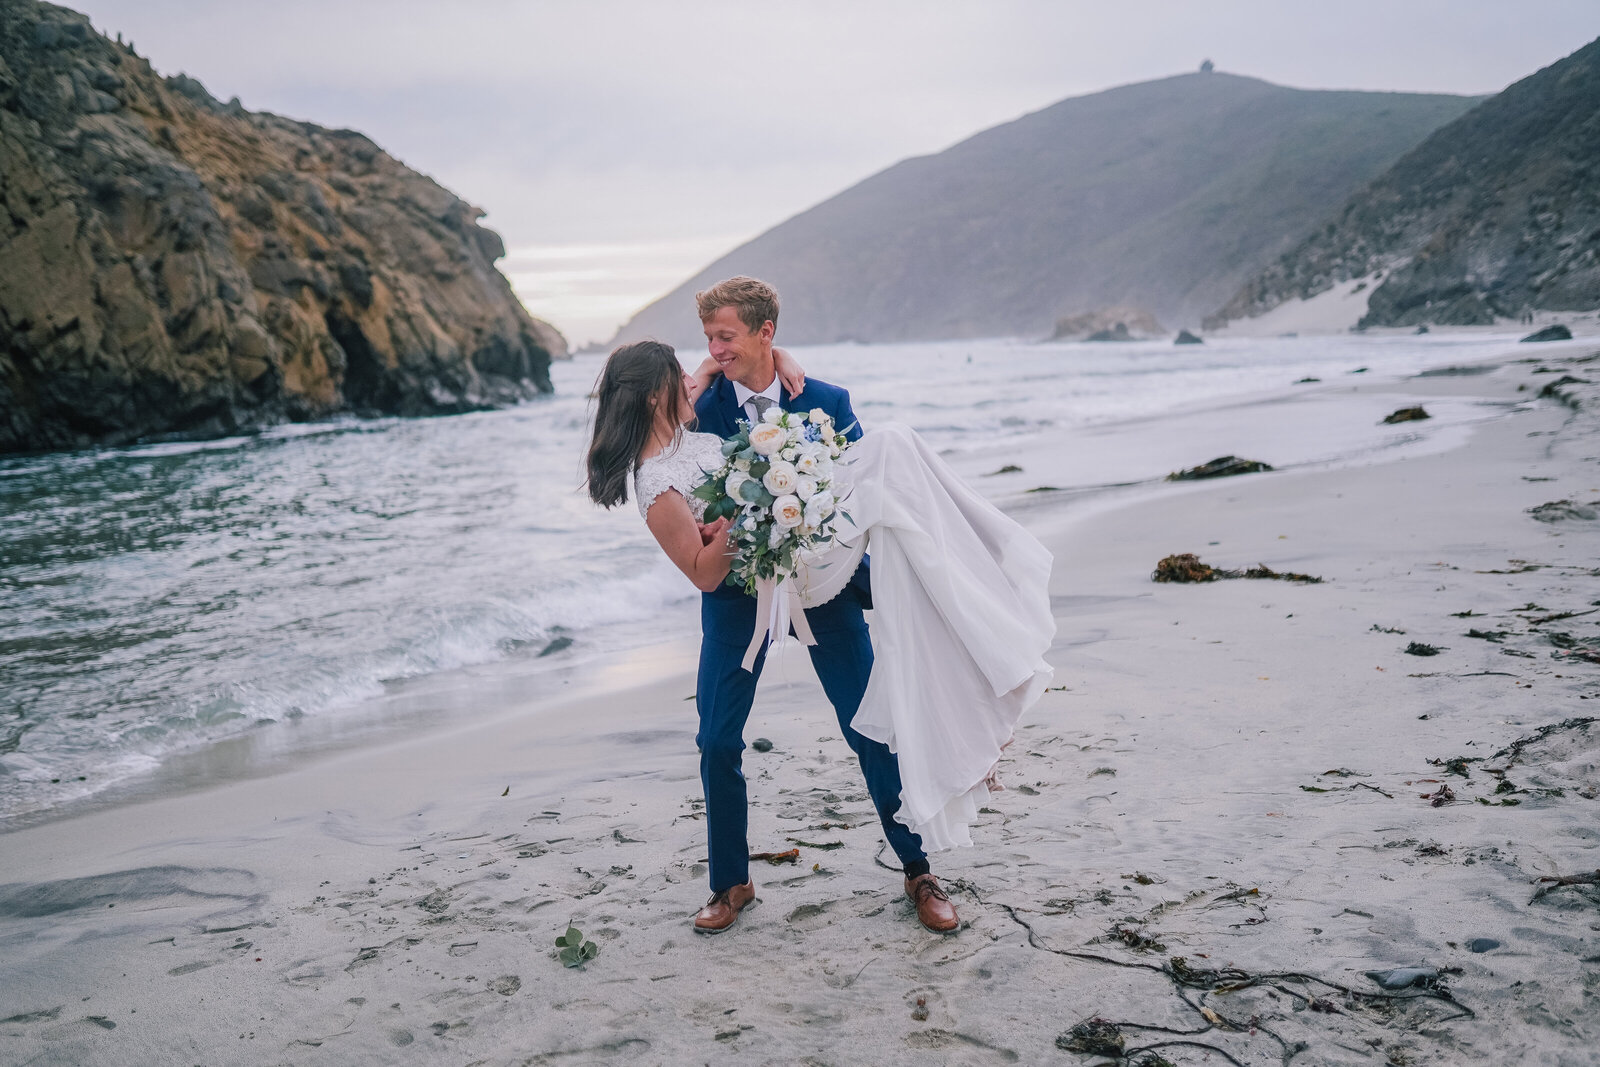 Sacramento Wedding Photographer captures bride and groom on beach during bridal portraits